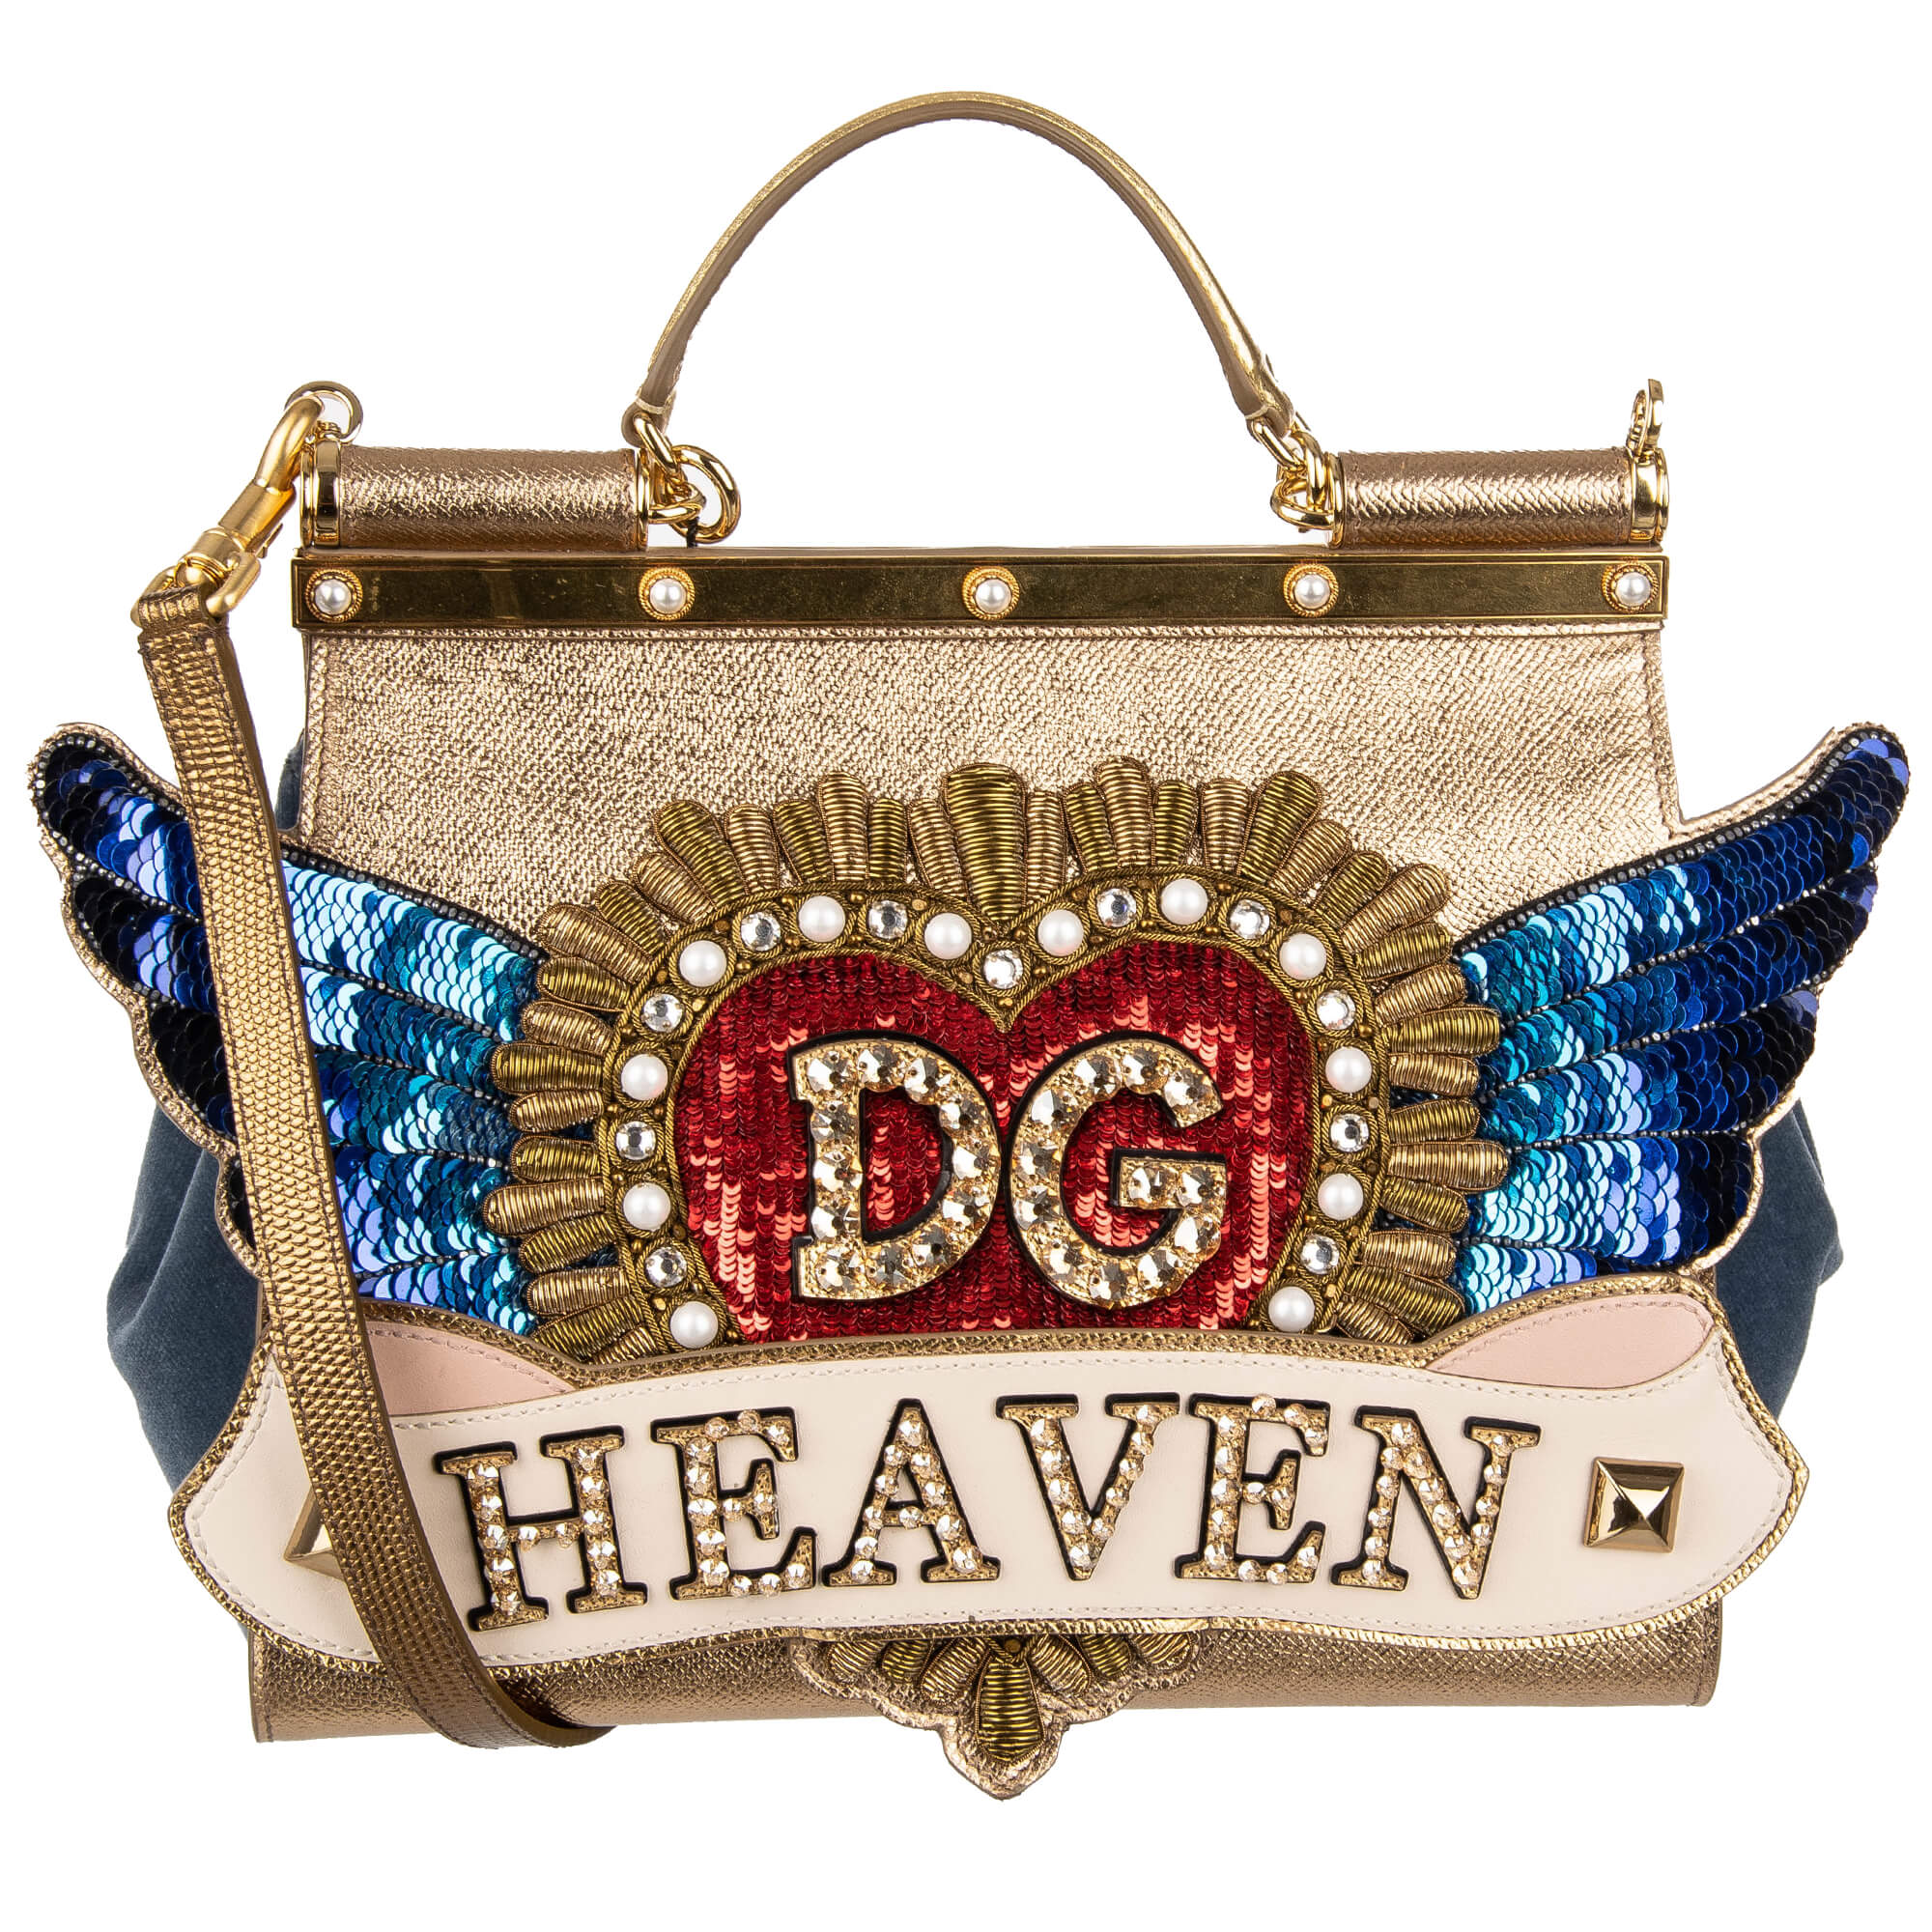 Dolce & Gabbana Bejeweled Bag with Crystal Embellishment - Metallic